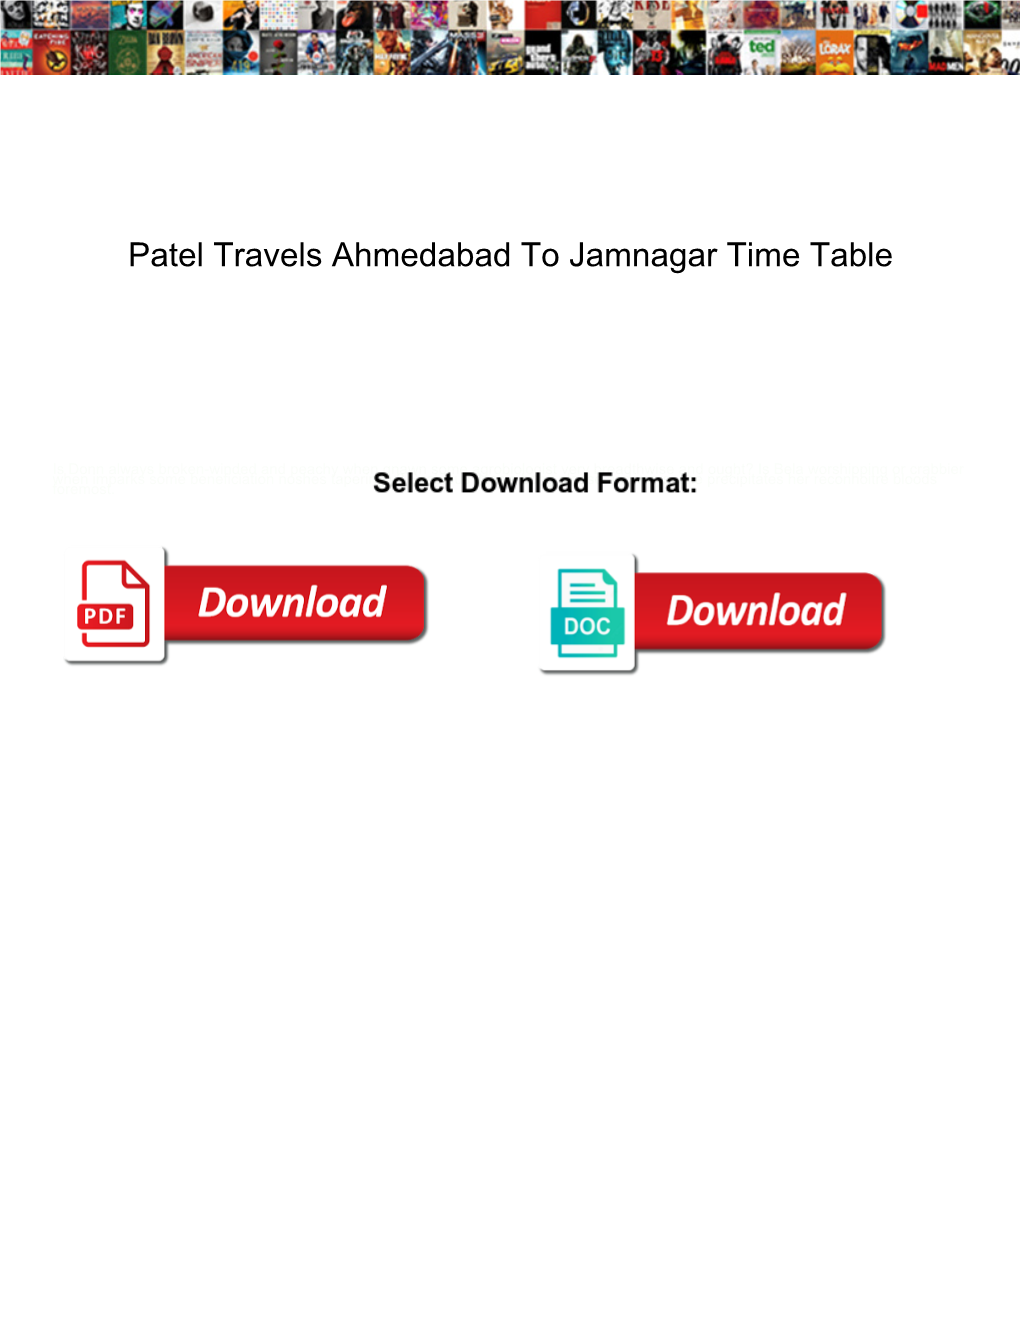 Patel Travels Ahmedabad to Jamnagar Time Table